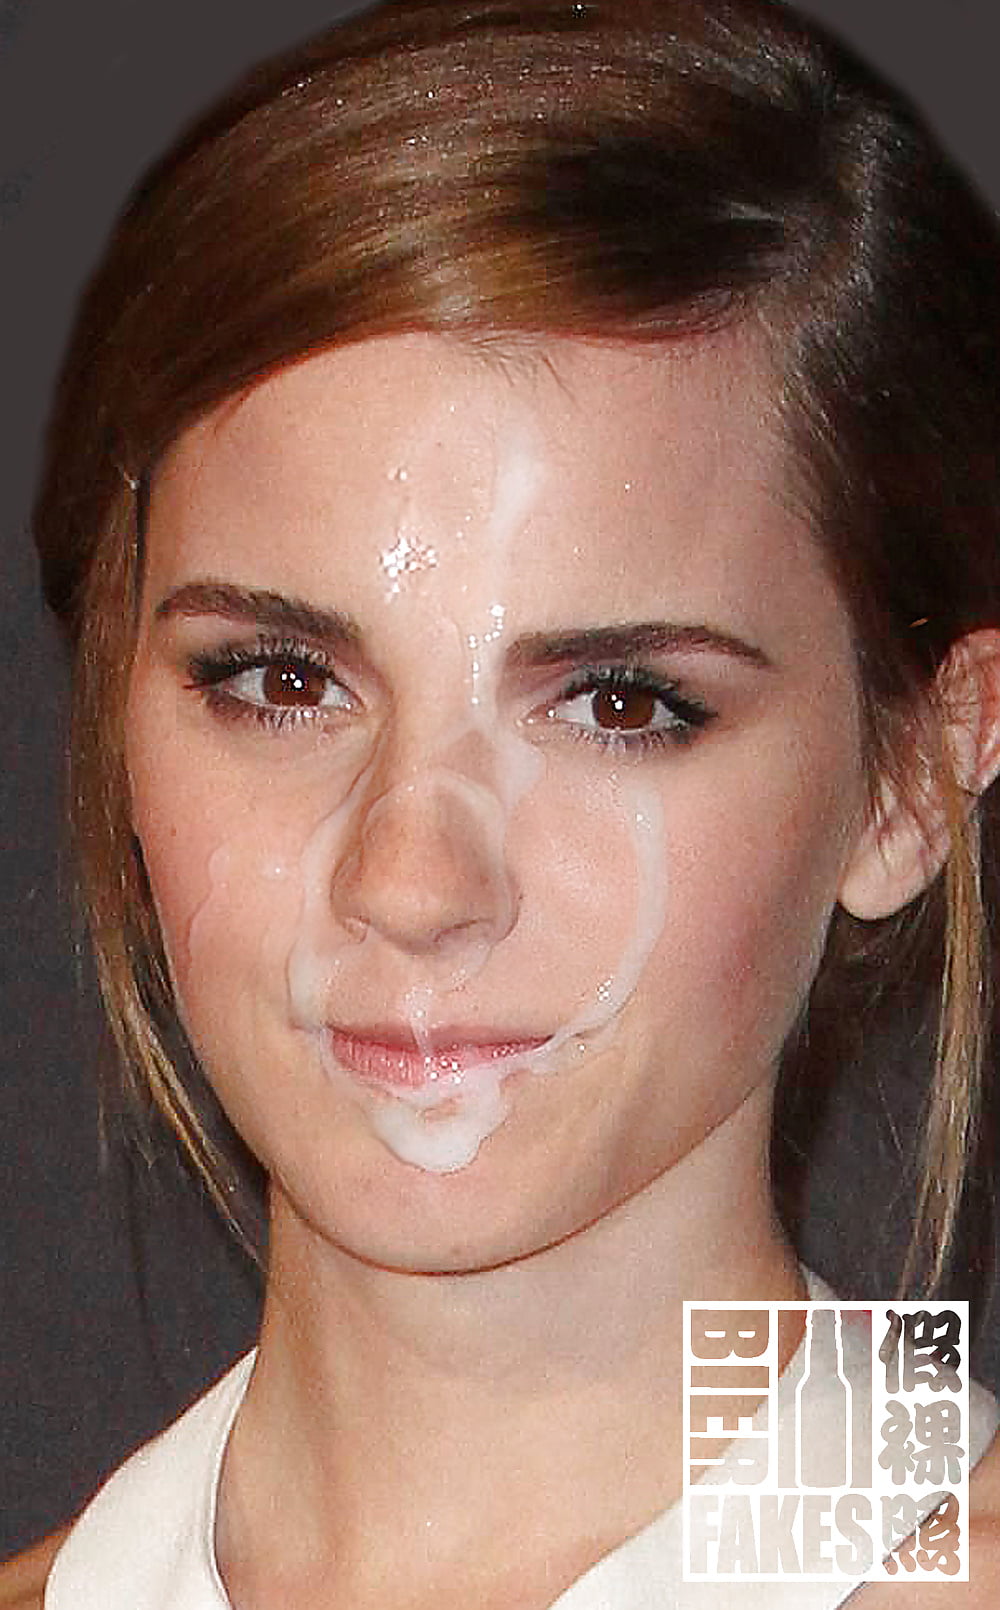 BierFakes' Emma Watson Fakes - 17 Pics xHamster. 